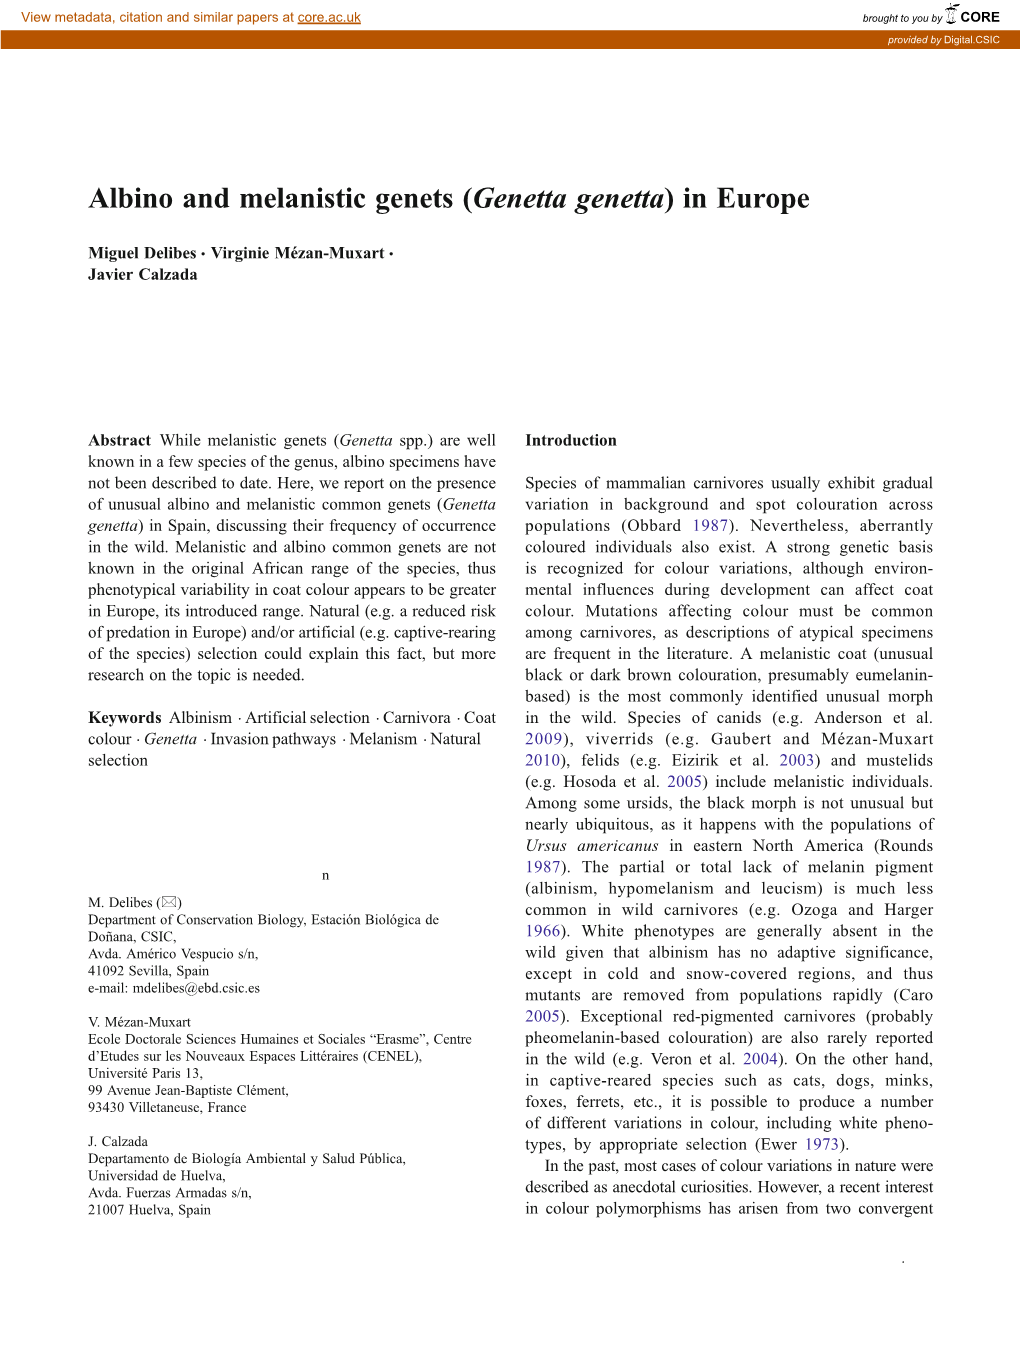 Albino and Melanistic Genets (Genetta Genetta) in Europe